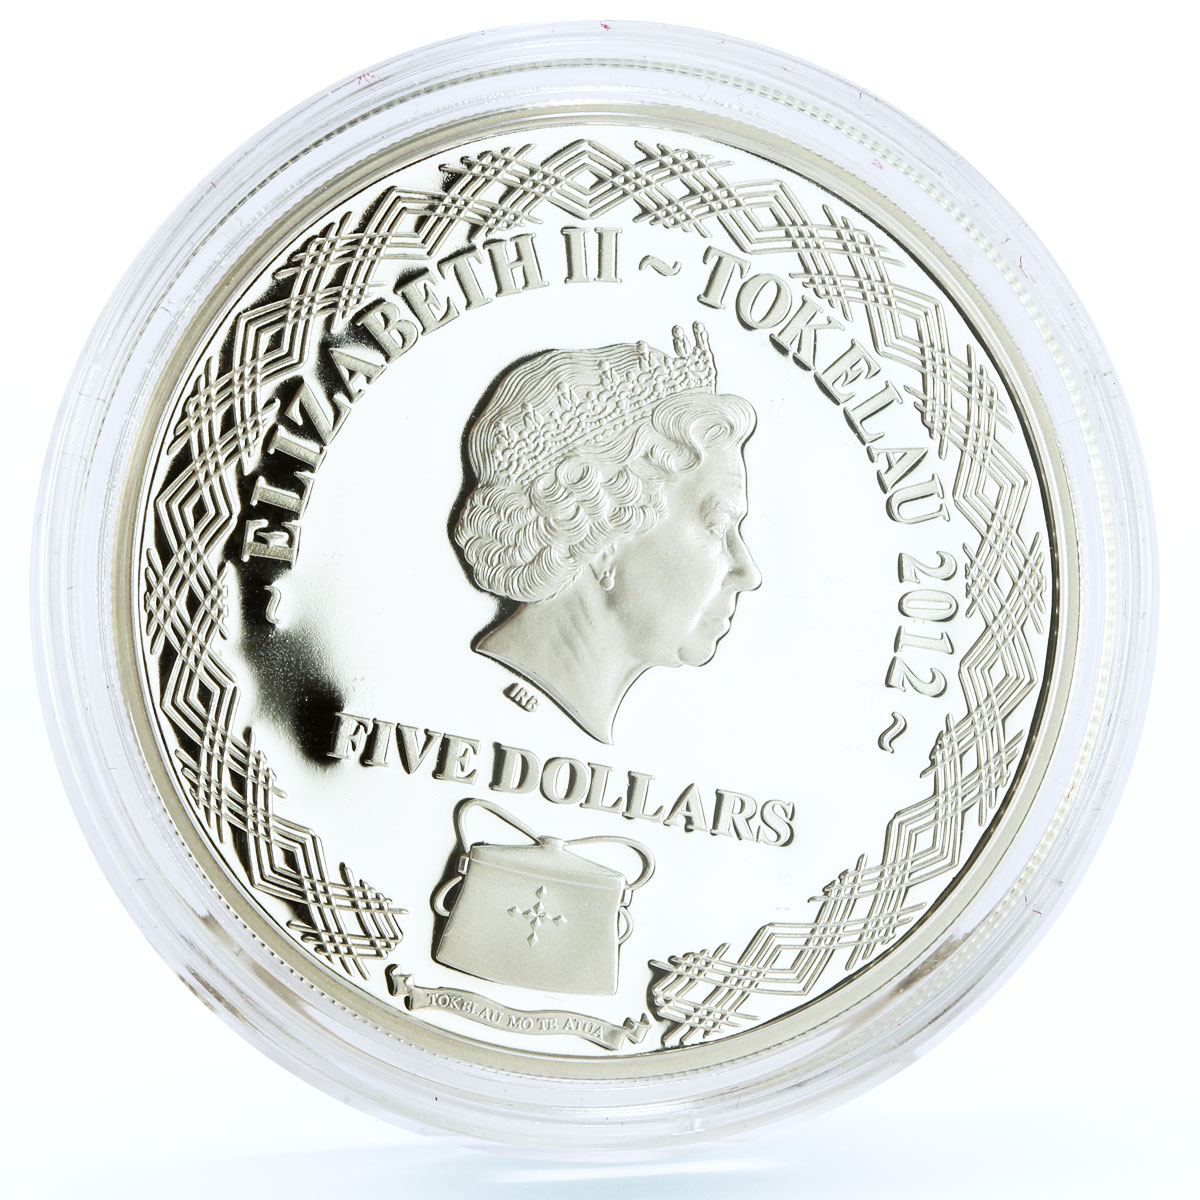 Tokelau 5 dollars Endangered Wildlife Dragonfly Fauna proof silver coin 2012